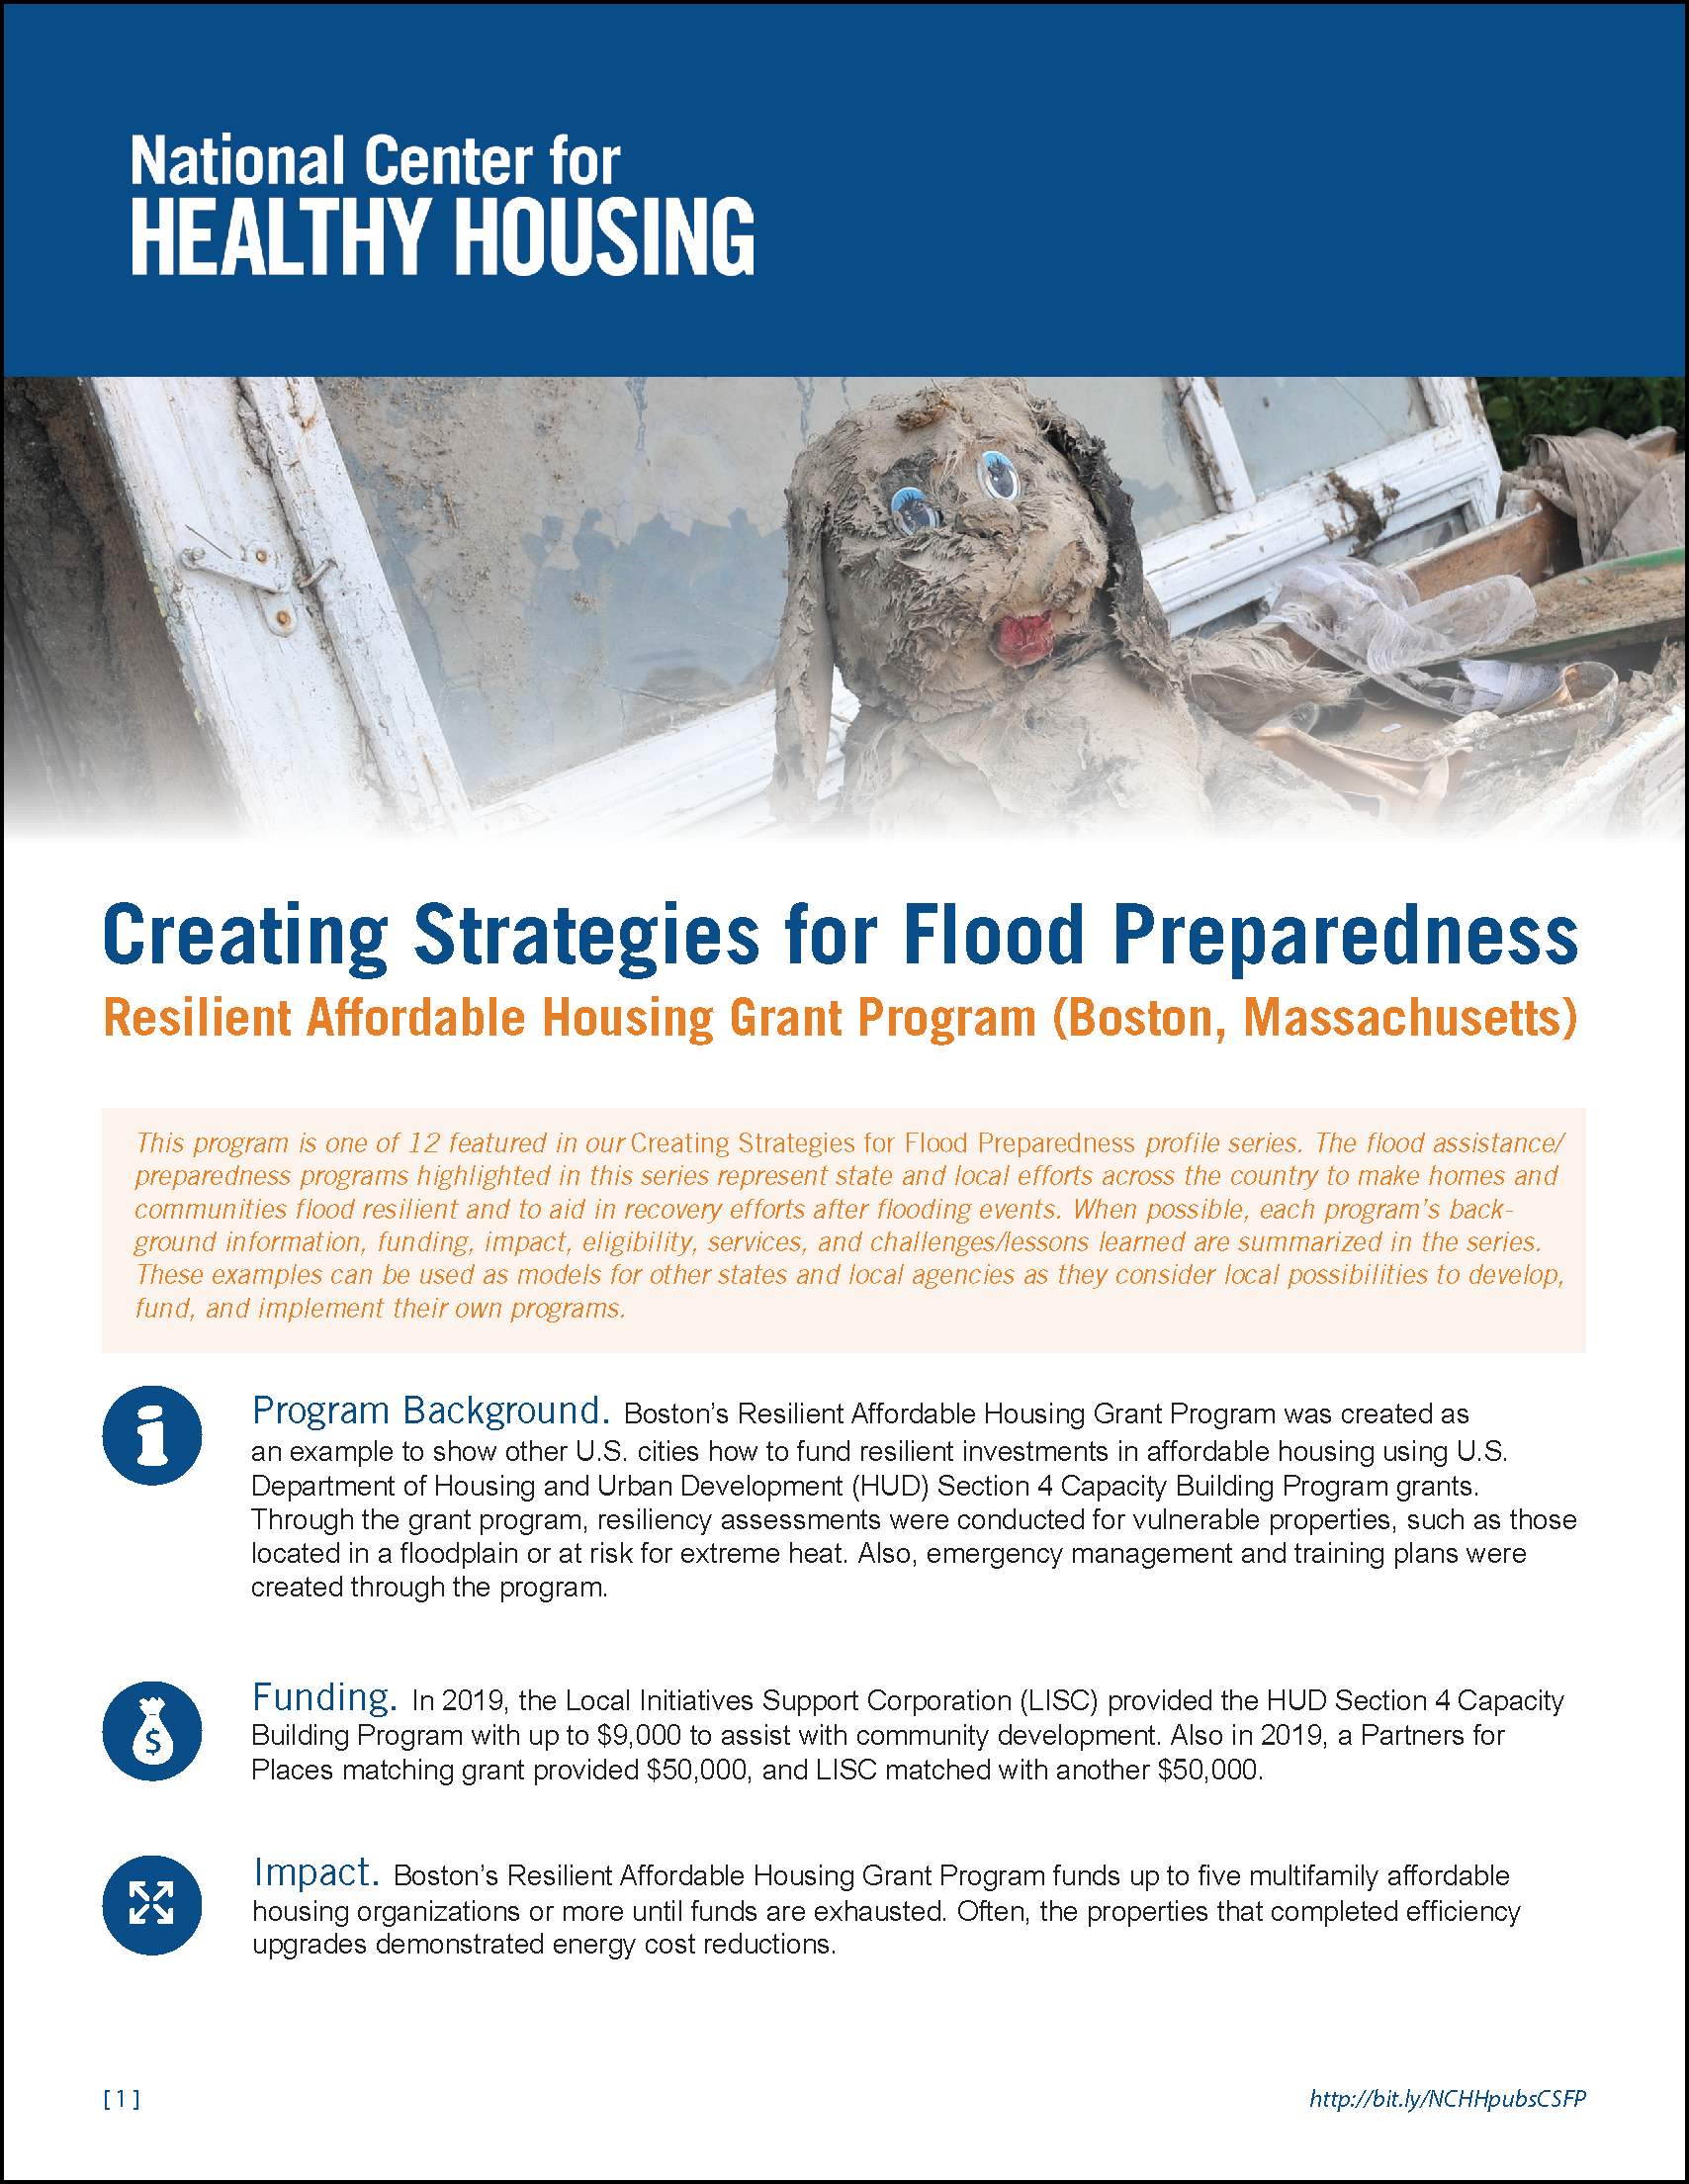 Creating Strategies for Flood Preparedness: Boston